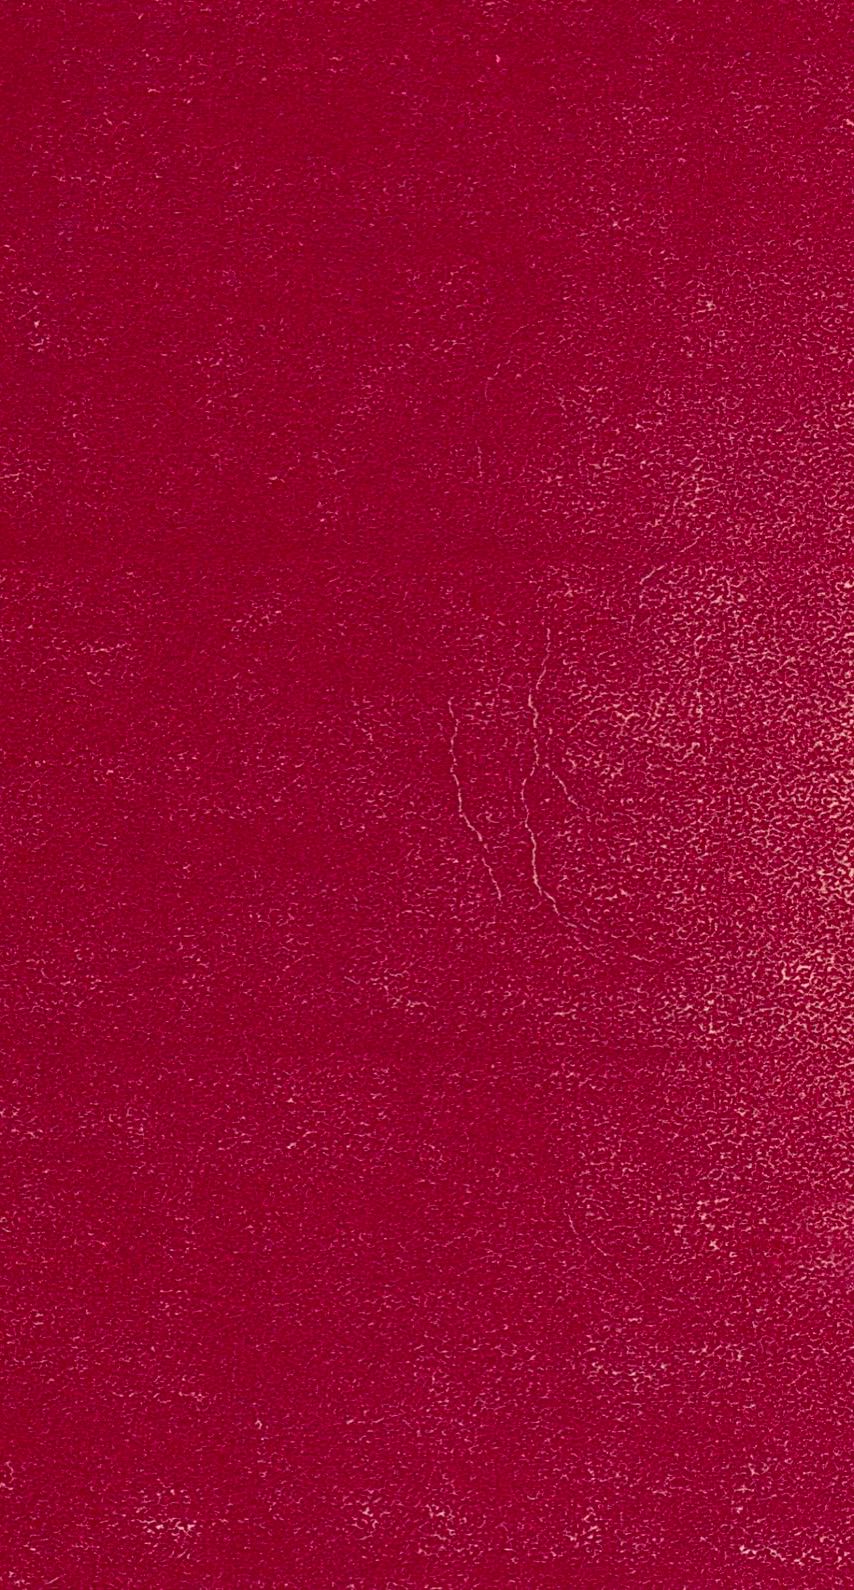 Paper Red Purple Wallpaper Sc Iphone6s